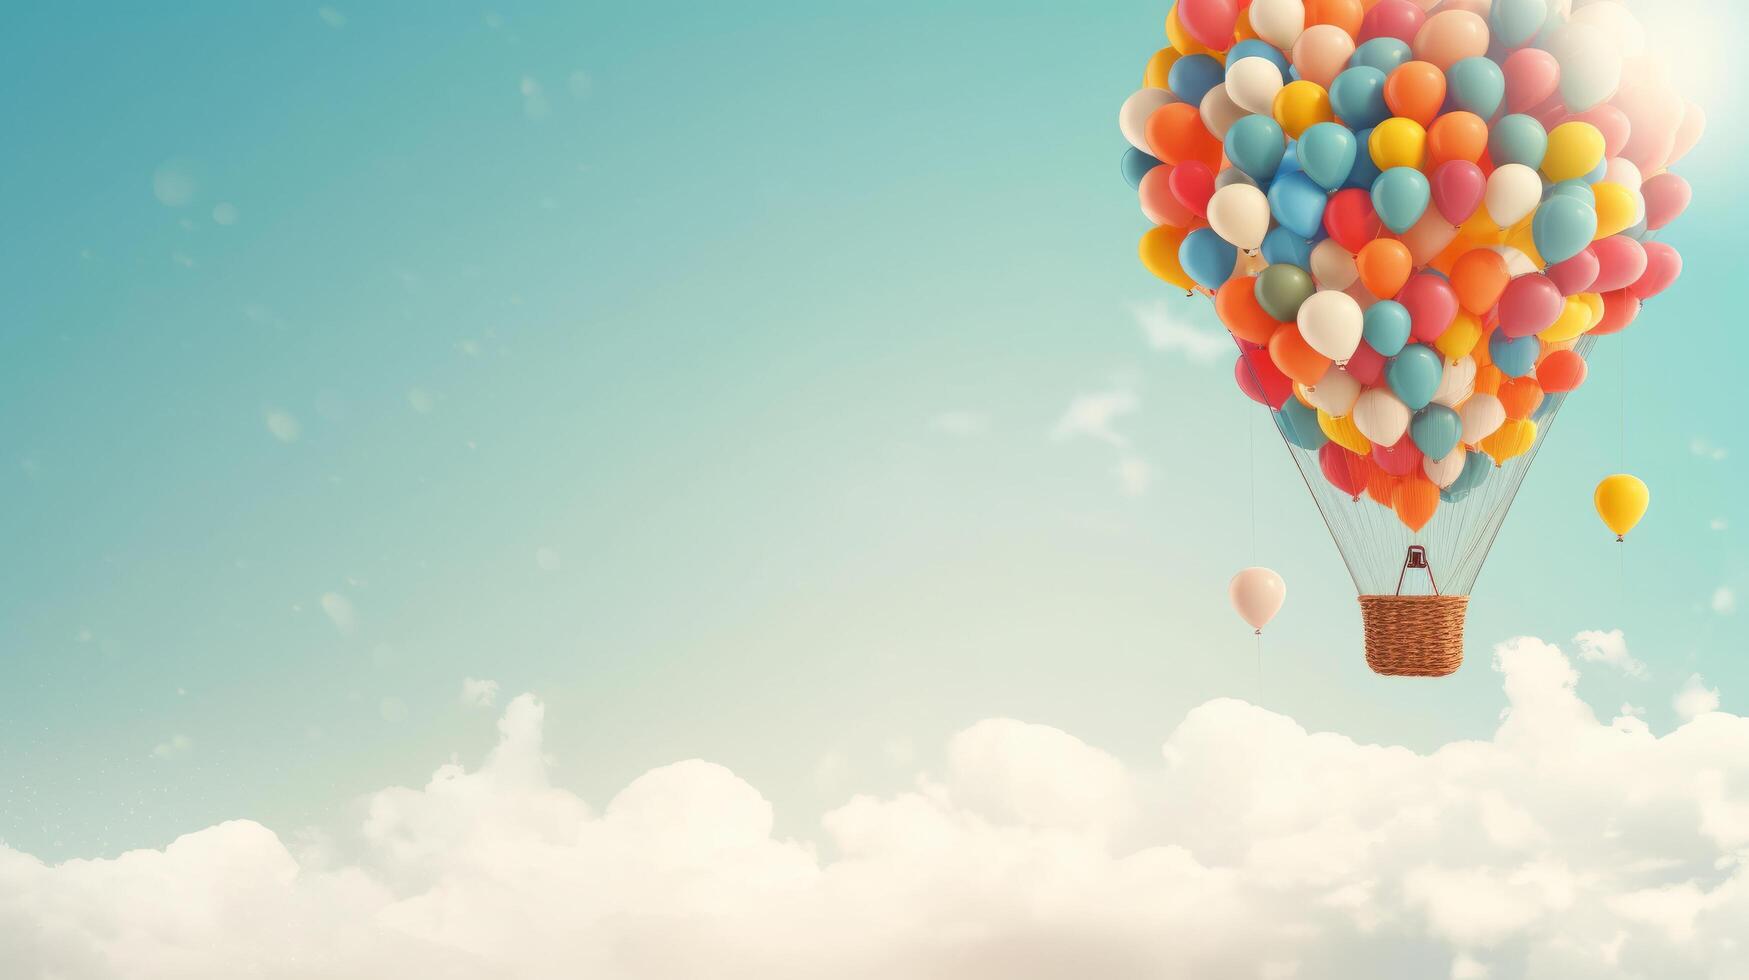 Hot air balloon background. Illustration photo